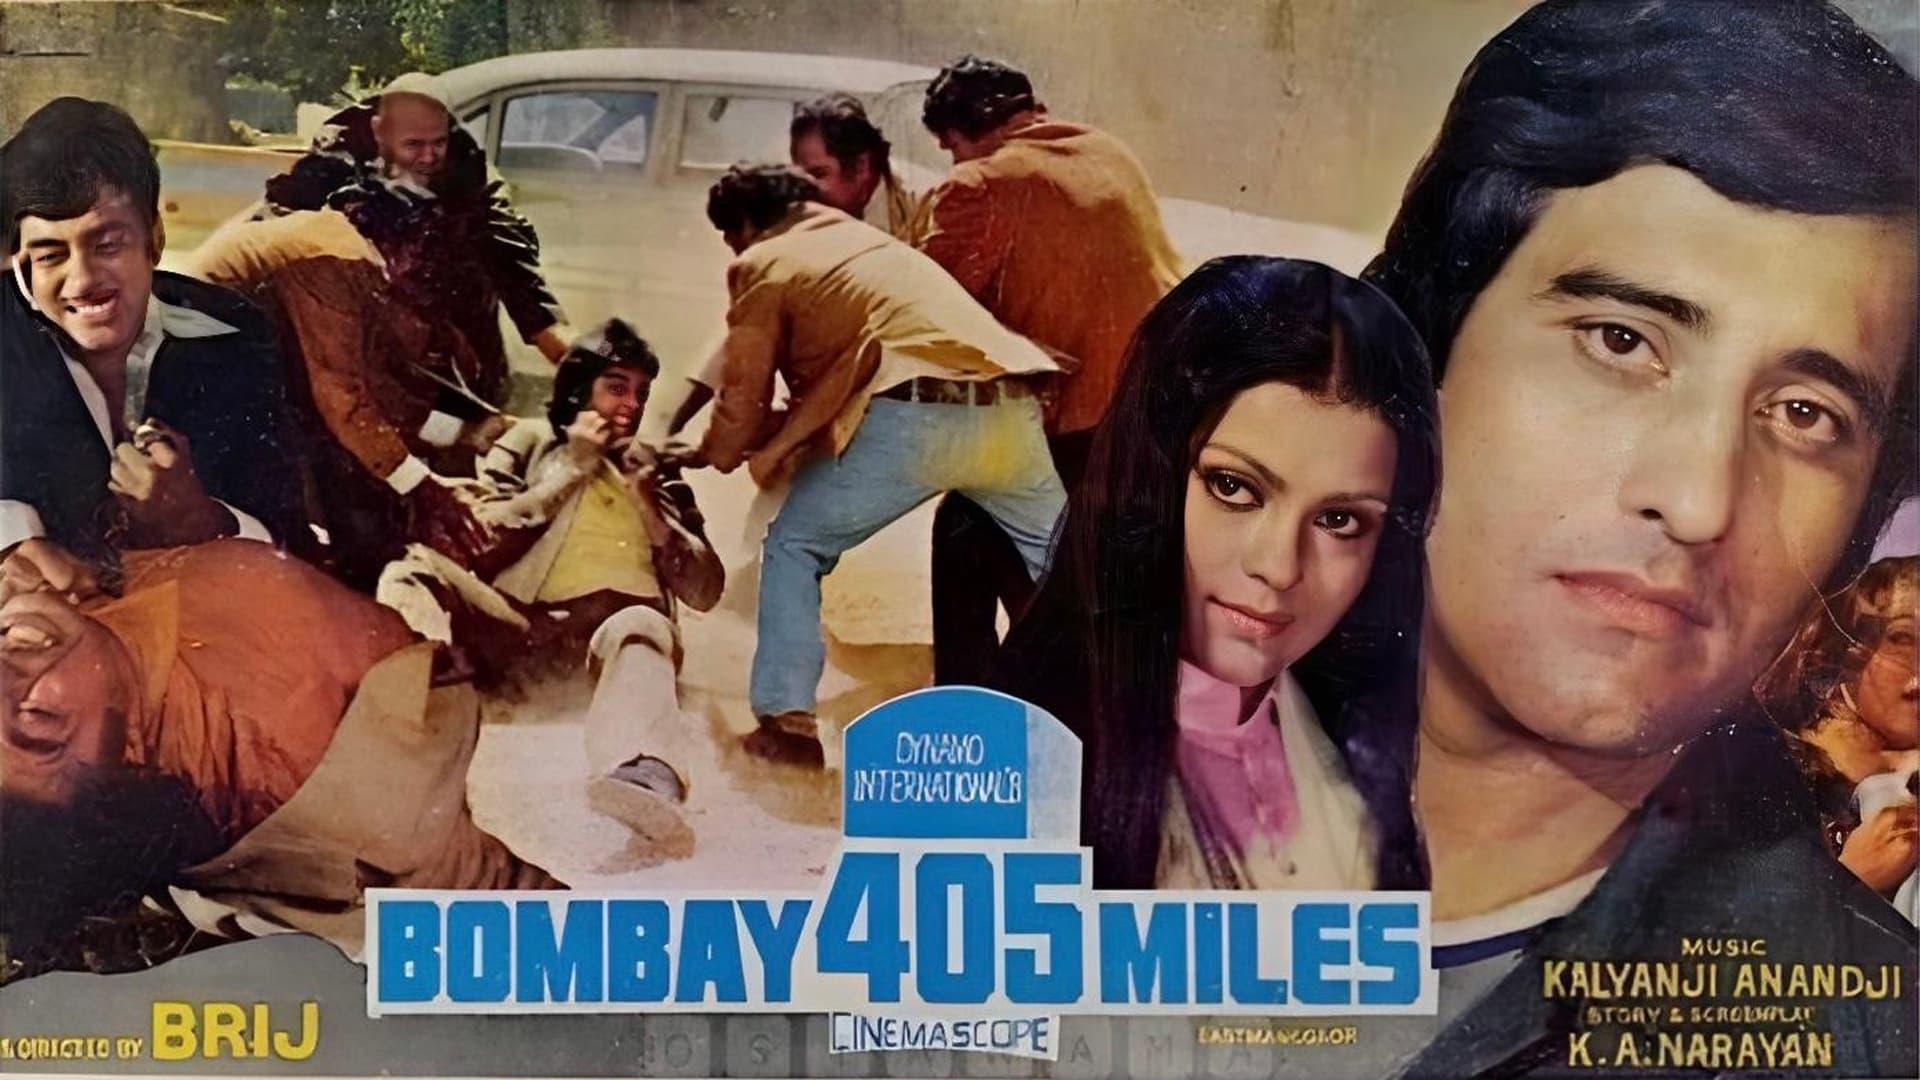 Bombay 405 Miles backdrop